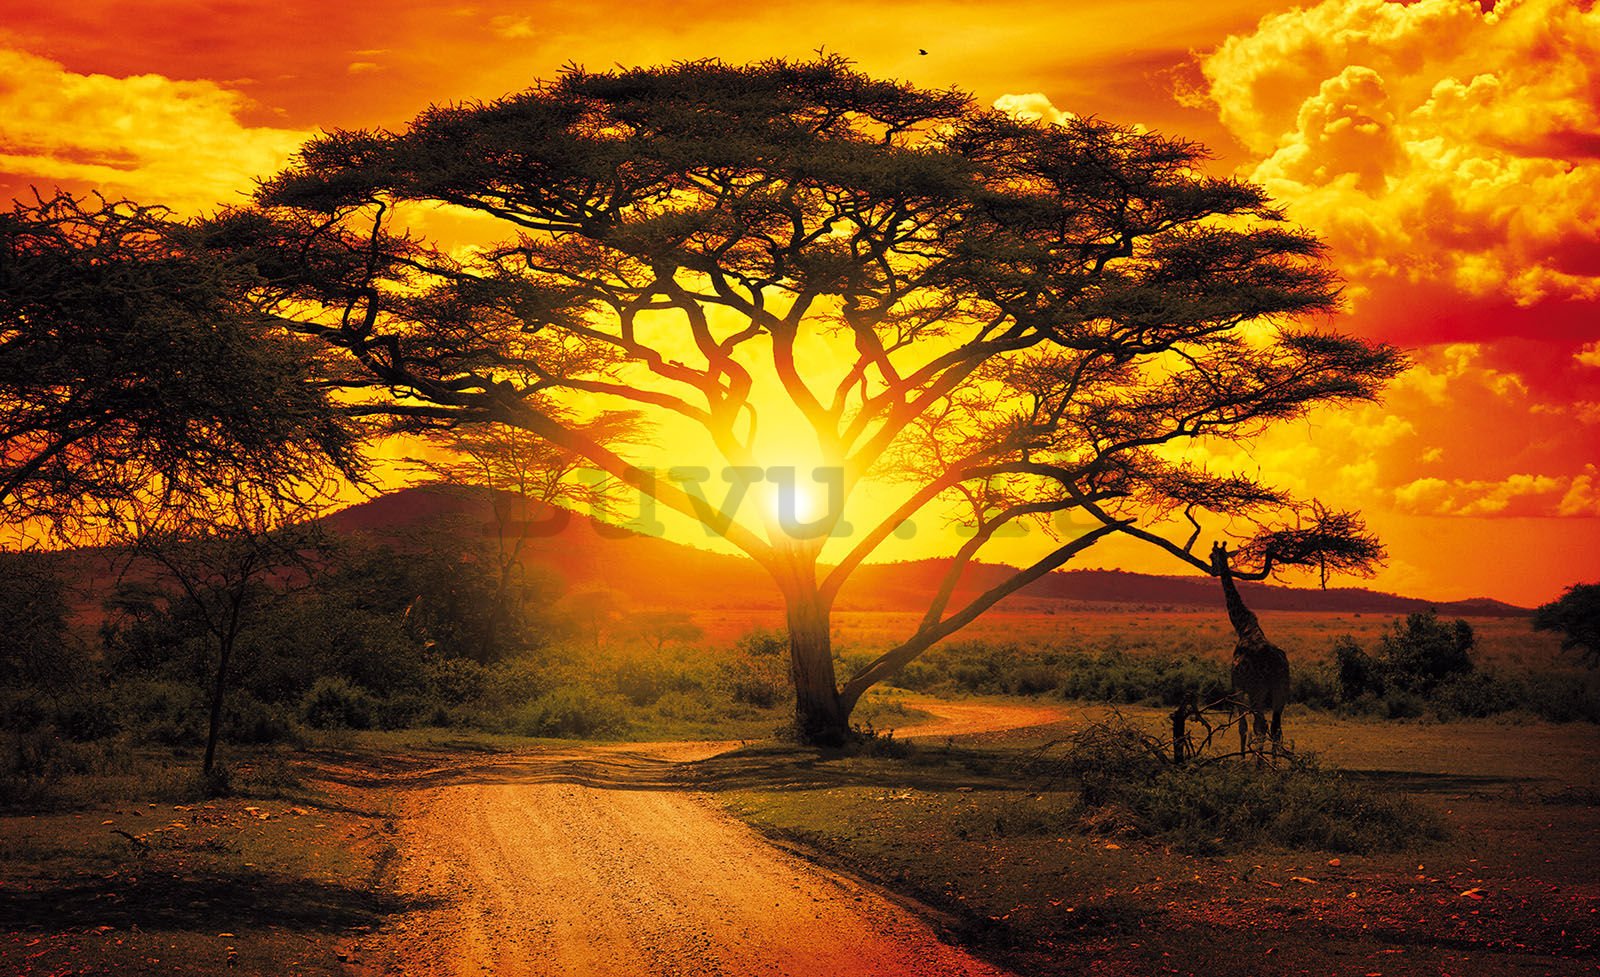 Fotomurale: Tramonto africano (1) - 368x254 cm